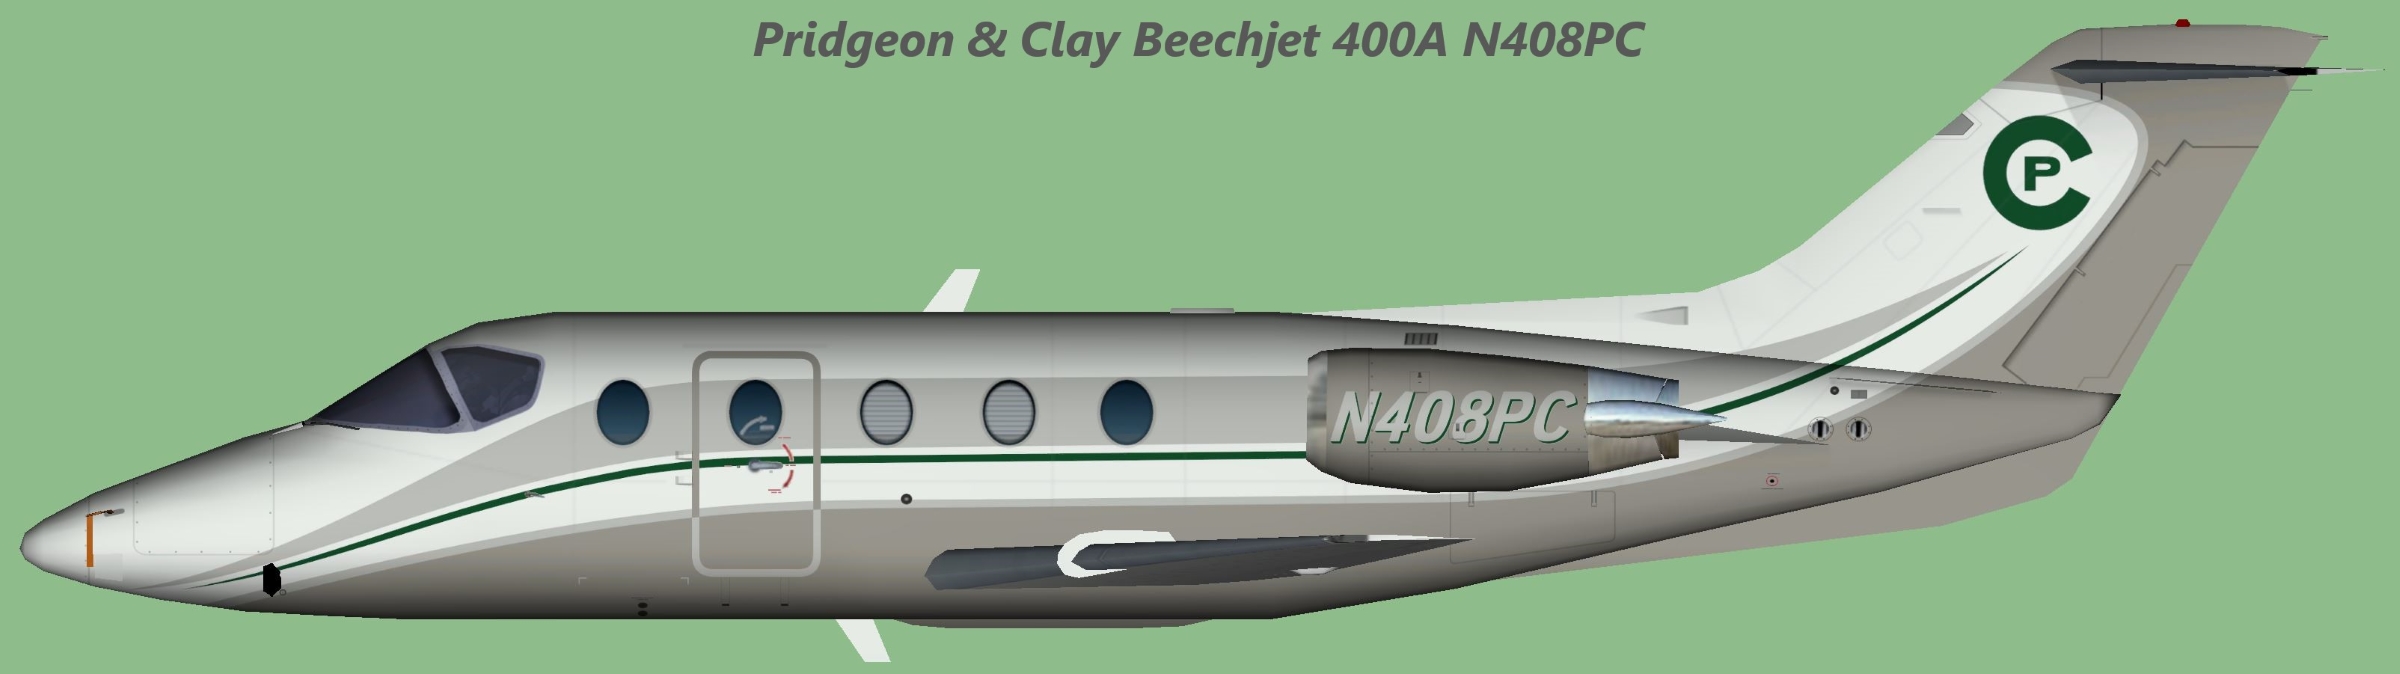 pridgeon-clay-beechjet-400a